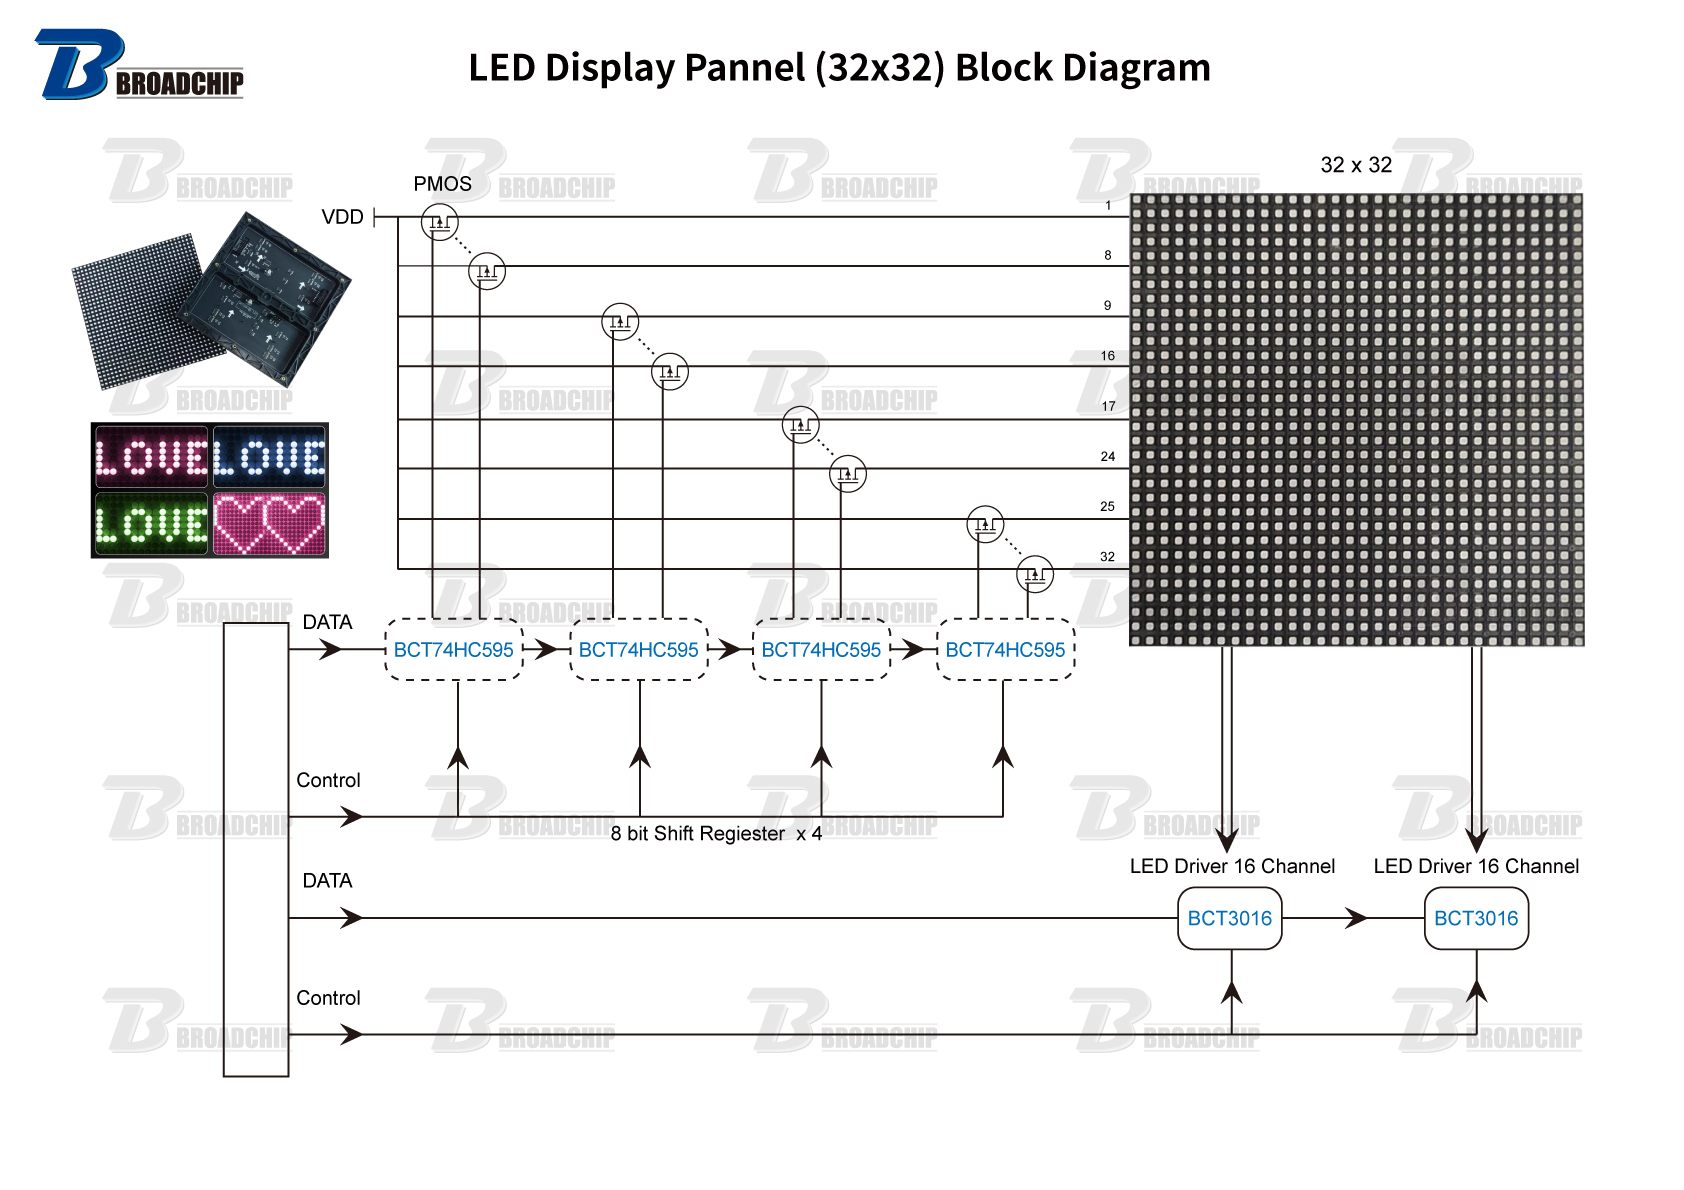 LED Display Pannel (32x32) Block Diagram.jpg